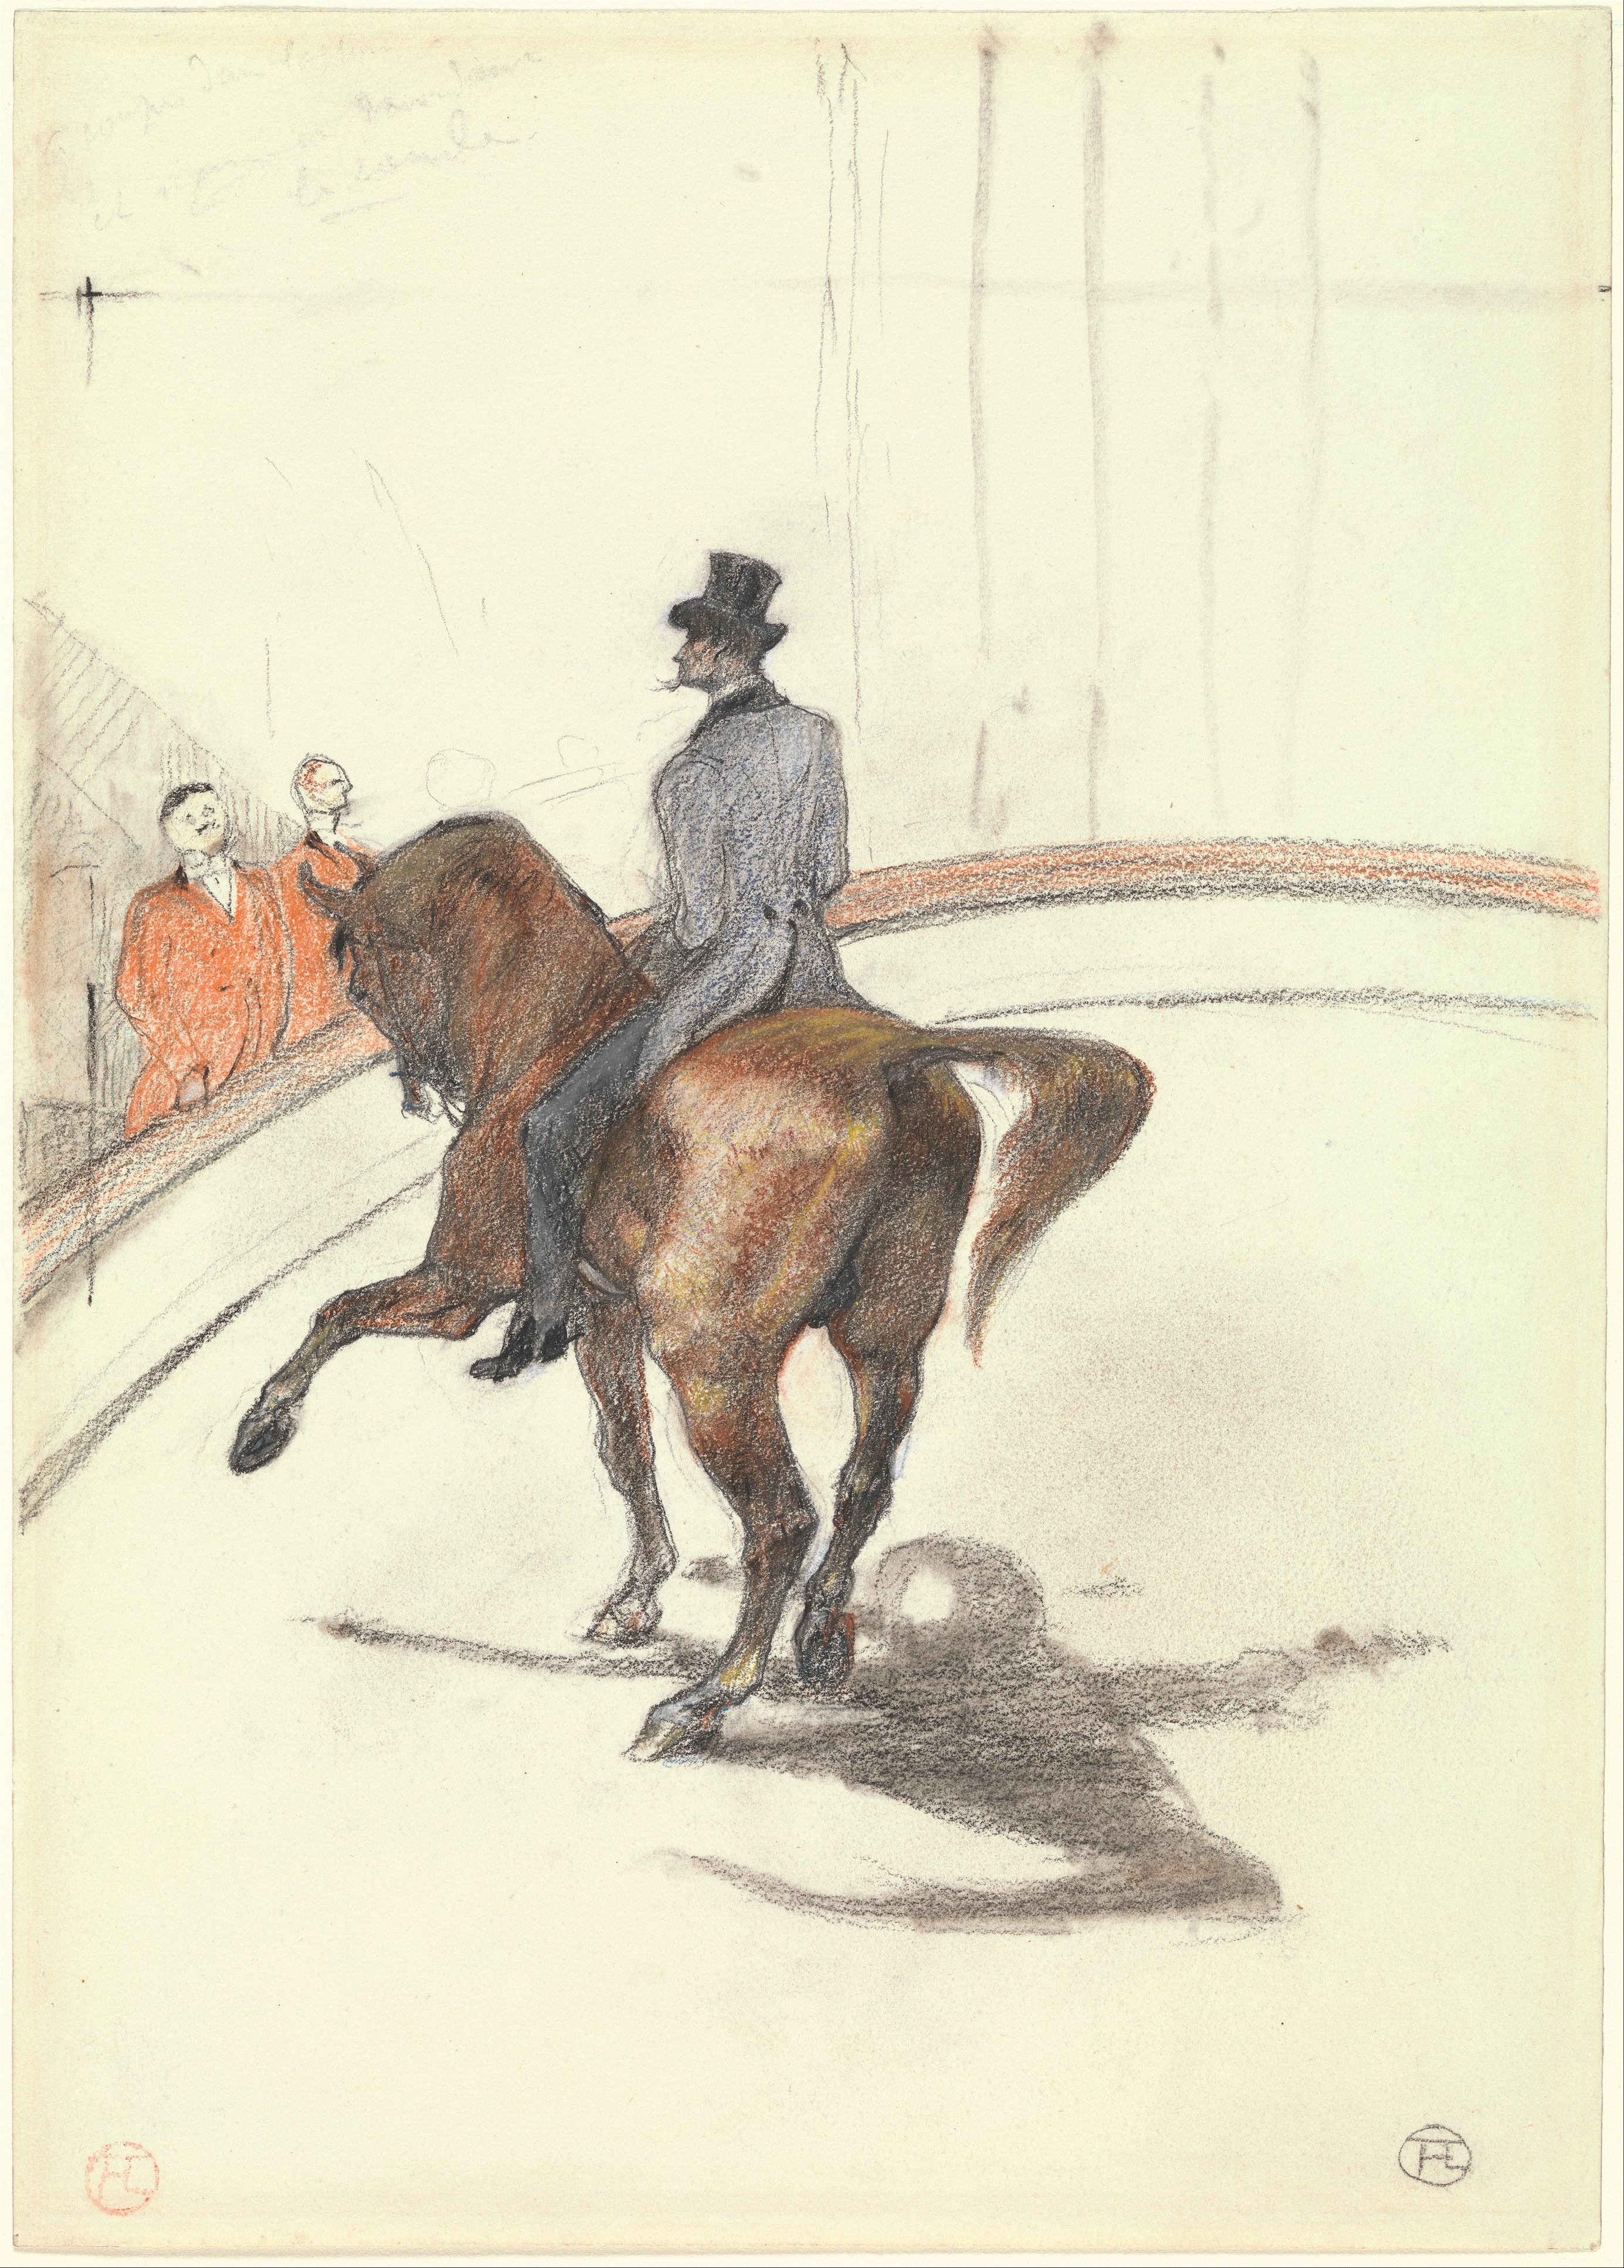 At the Circus: The Spanish Walk by Henri de Toulouse-Lautrec - 1899 - 35 x 25 cm Metropolitan Museum of Art